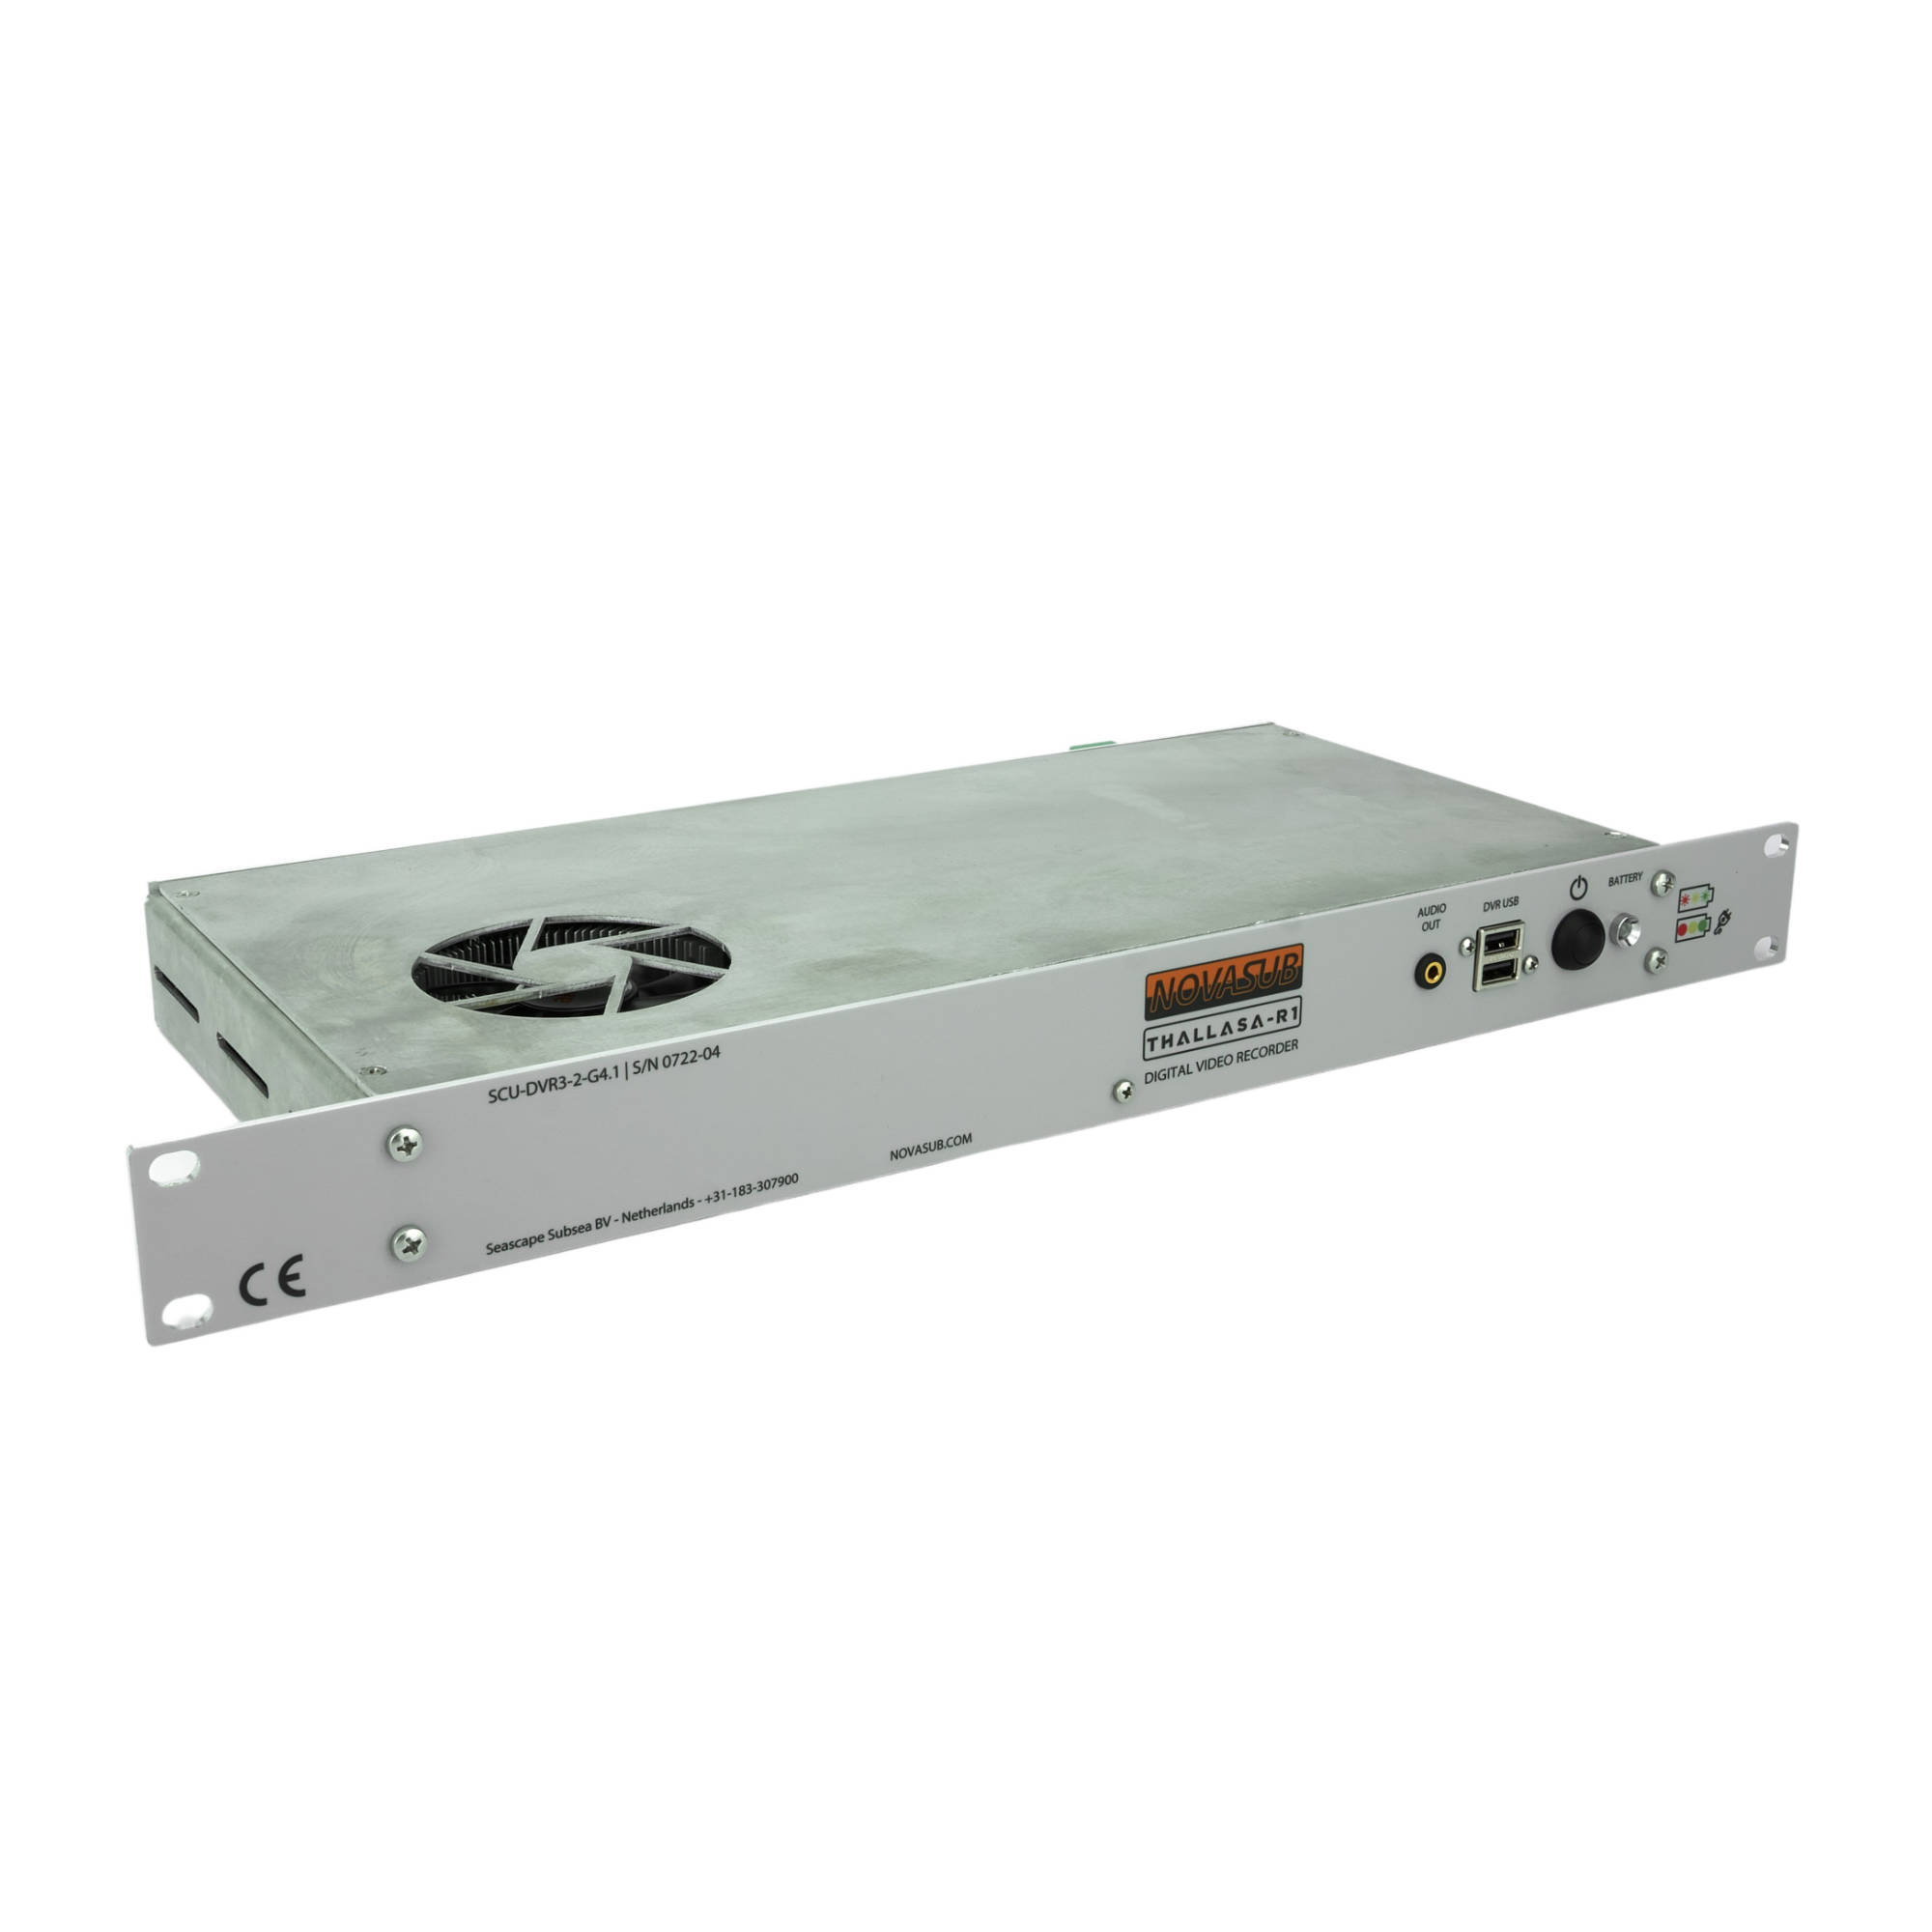 THALLASA-R1 - Rackmount video recorder MAIN